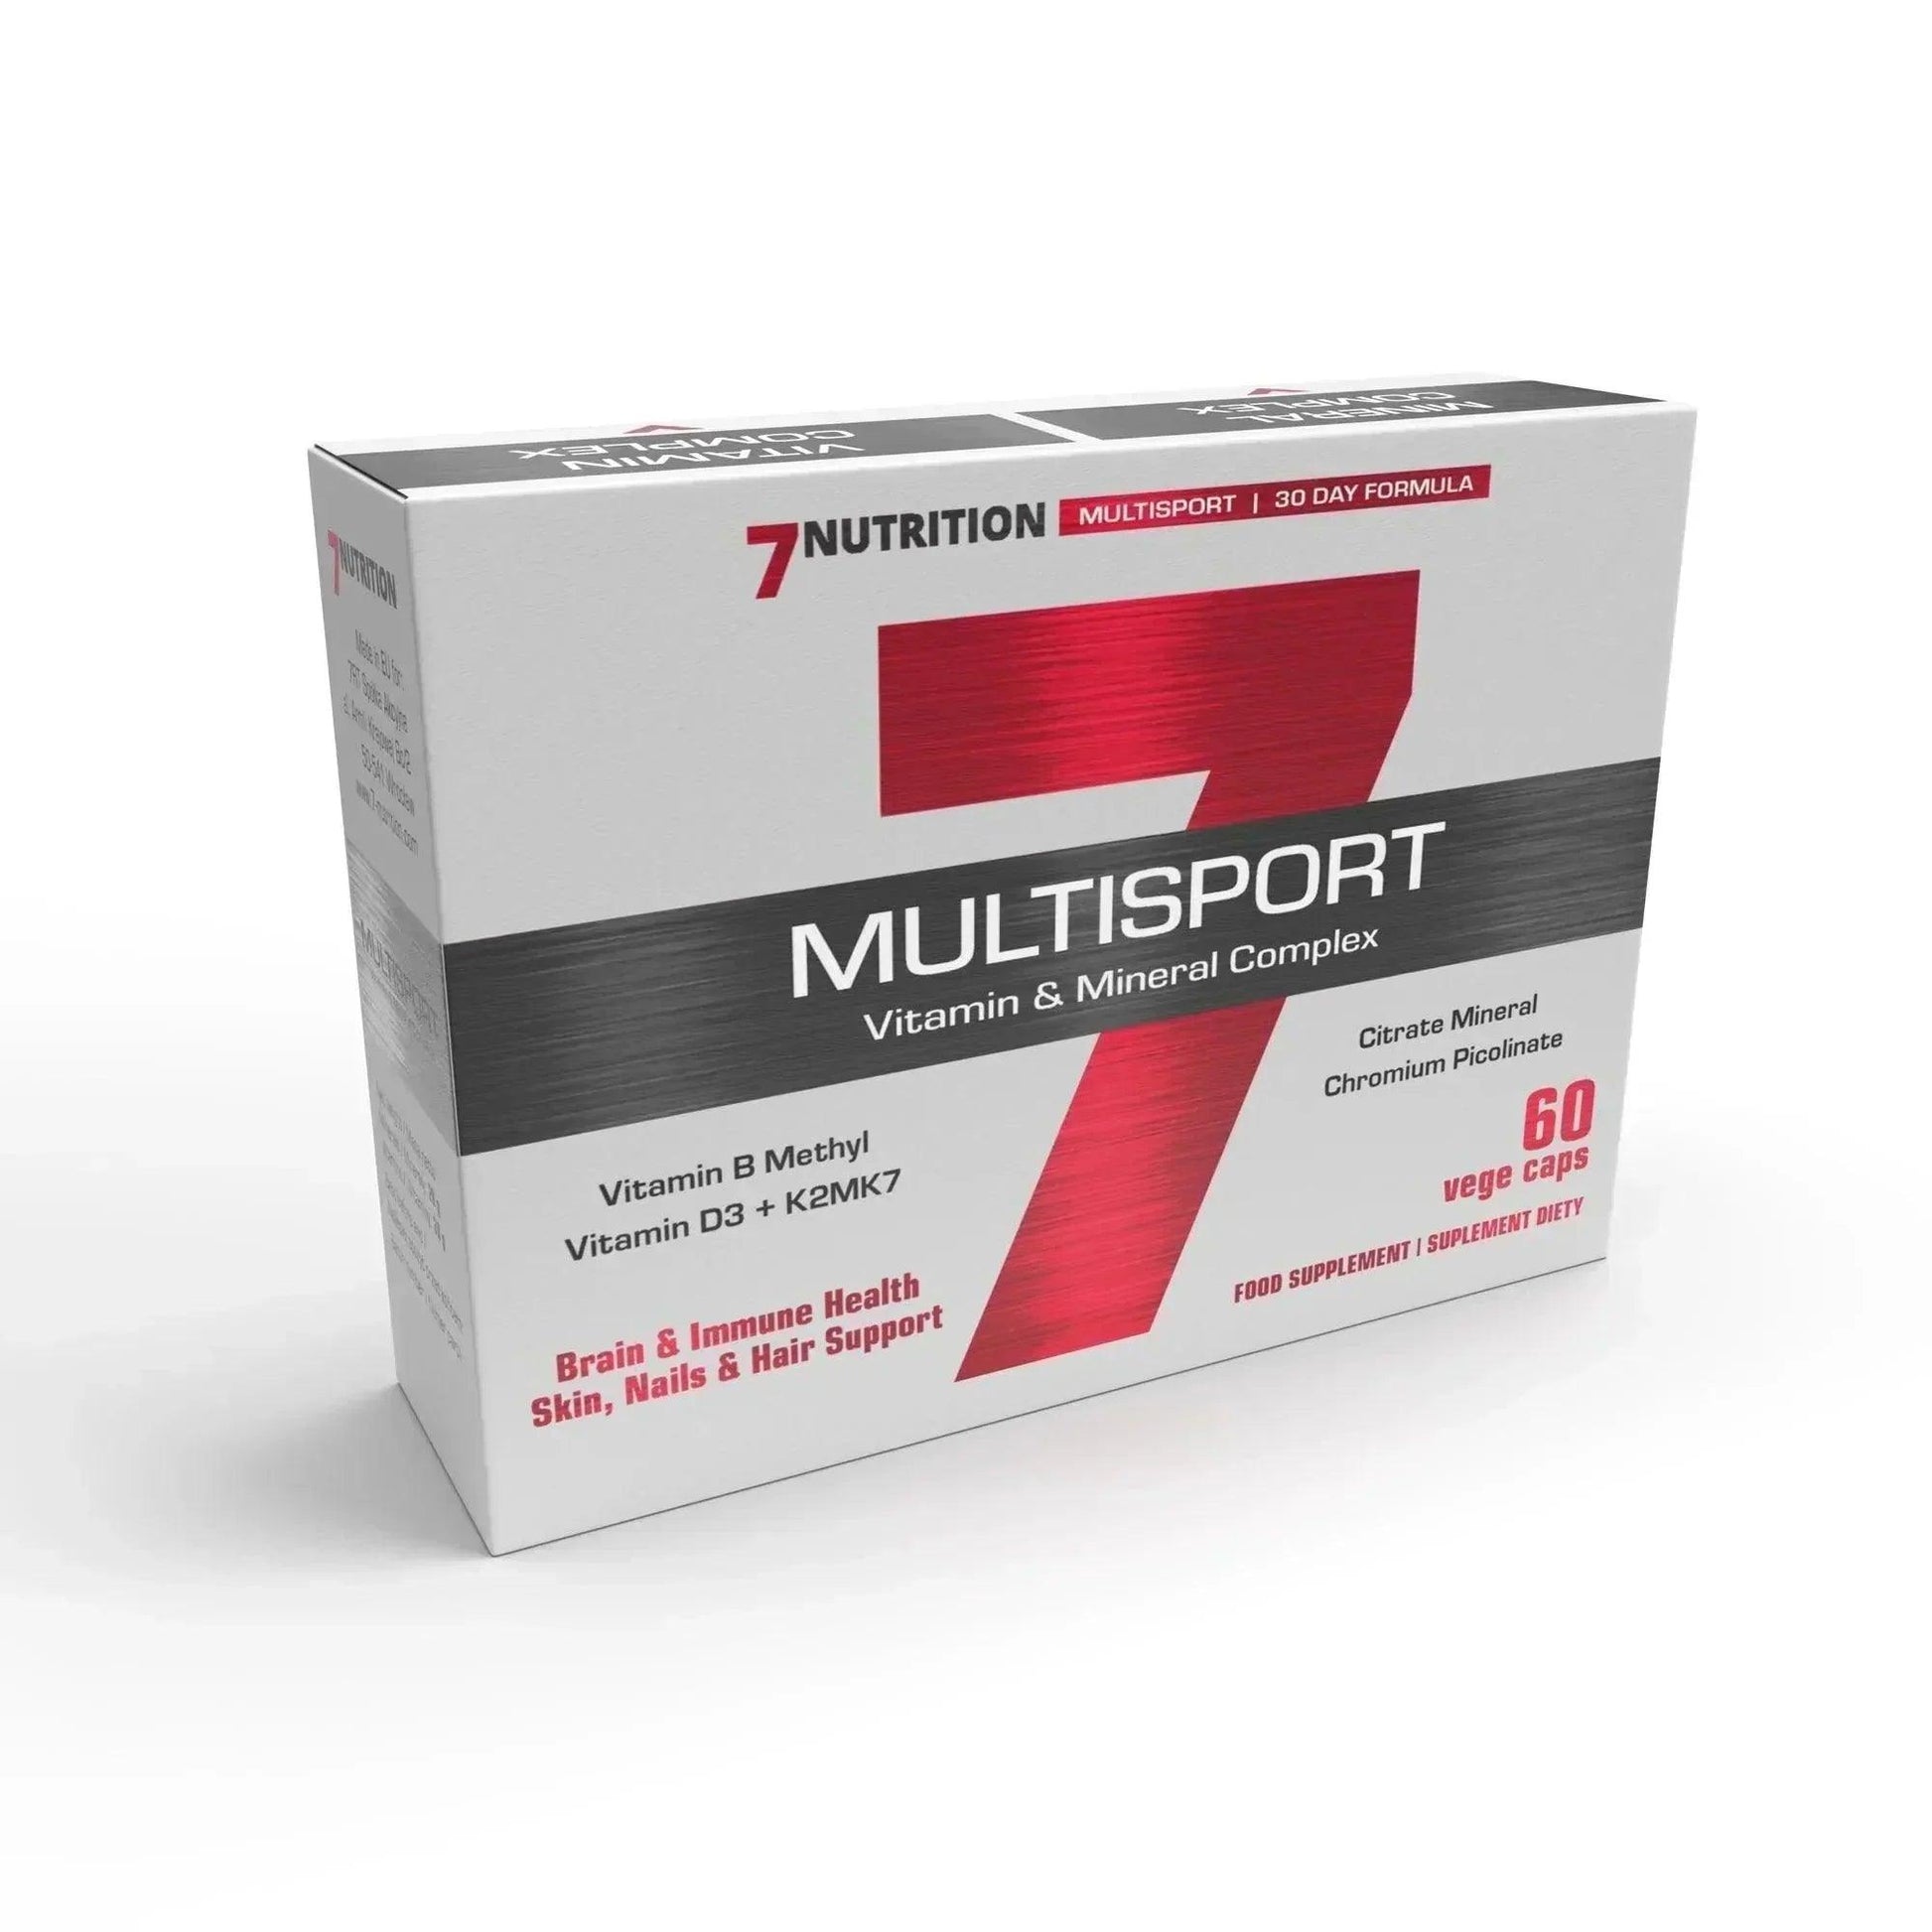 7Nutrition Multisport Multivitamin und Multimineral Complex 60Caps - Supplement Support